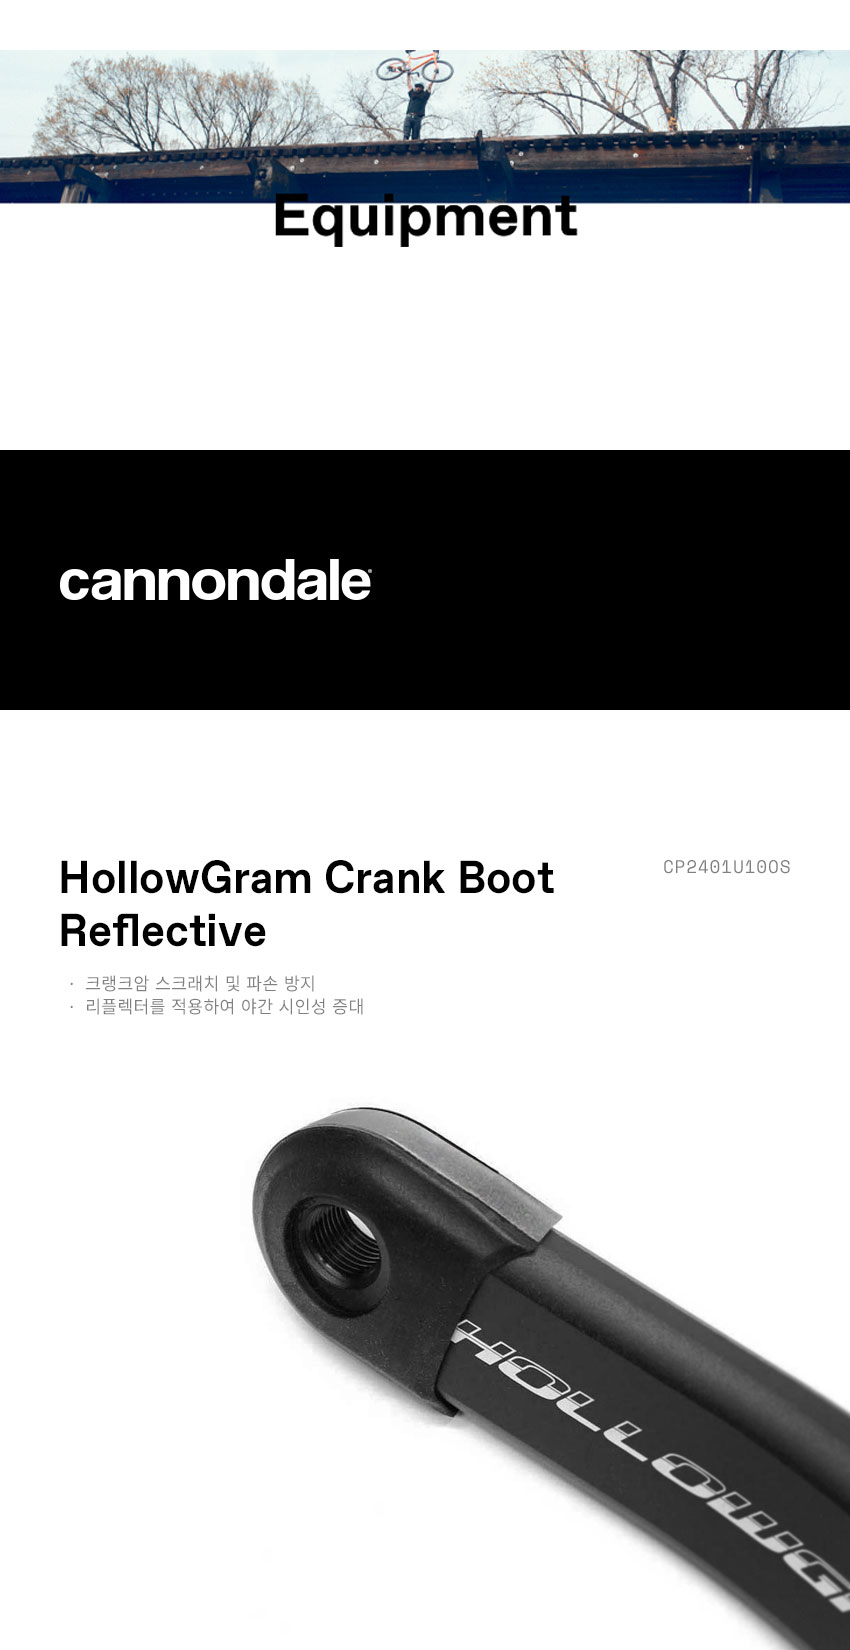 CA_Equipment_cannondale-hollowgram-crank-boot_063025.jpg